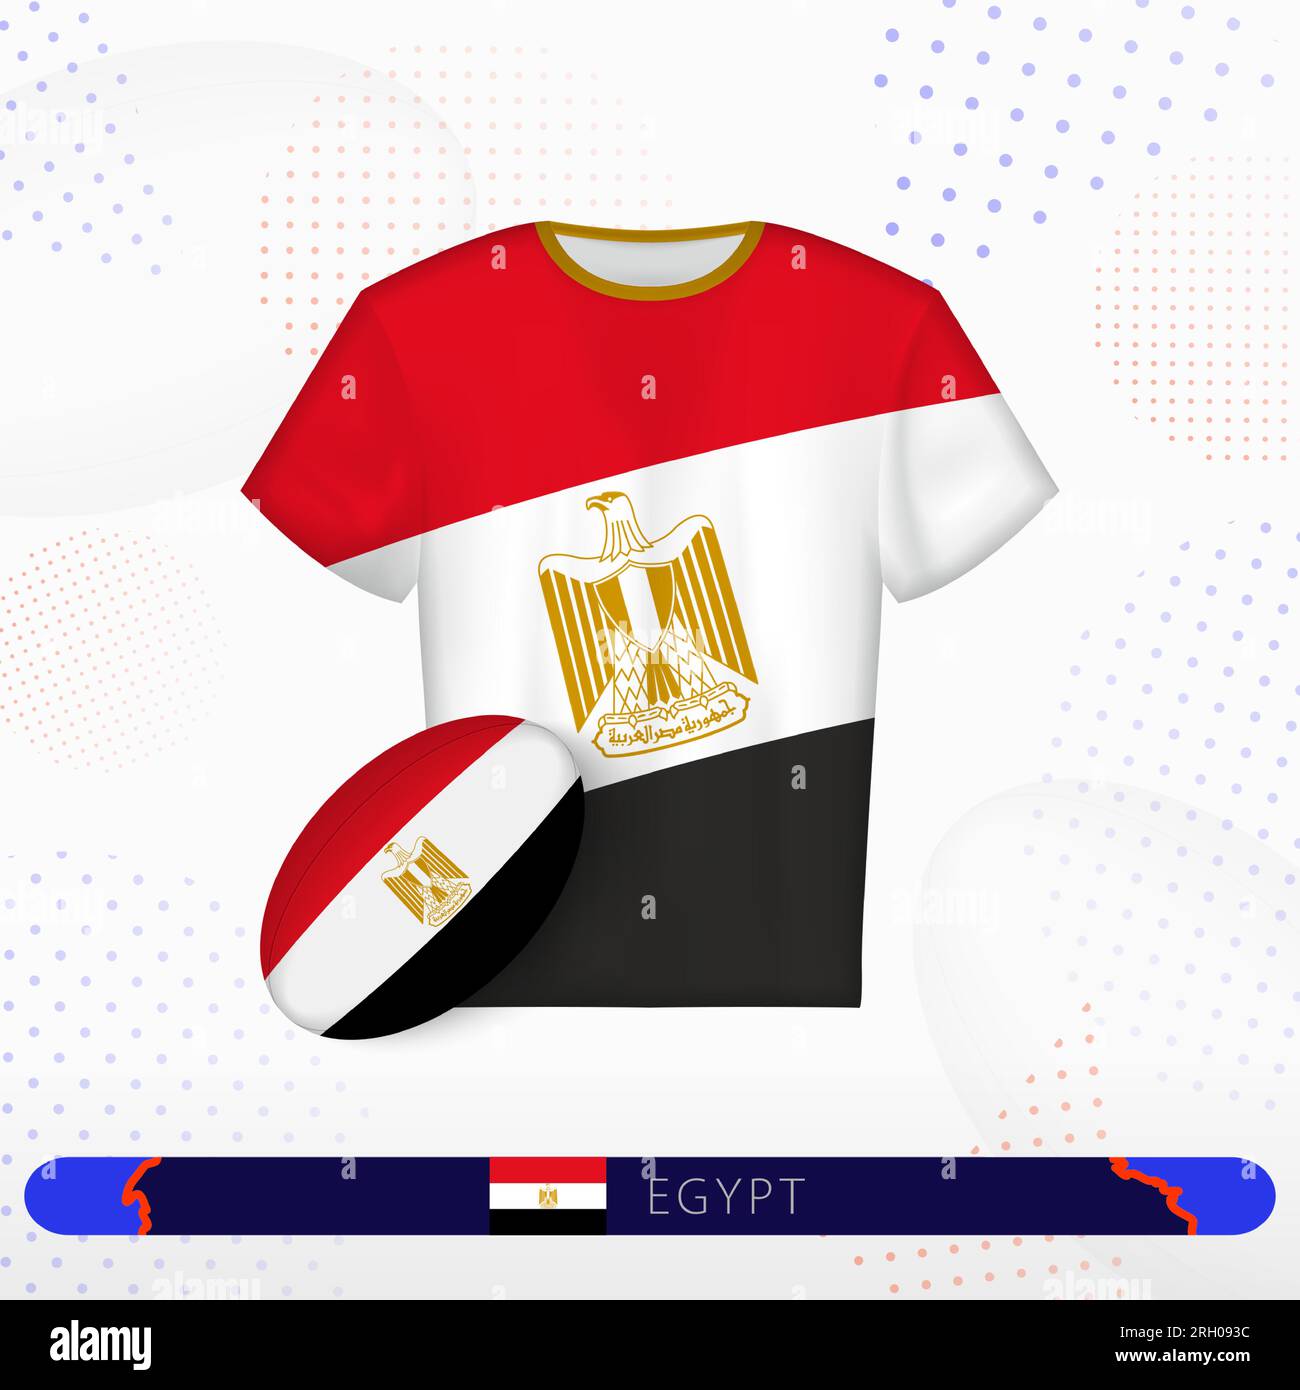 egypt national football team shirt